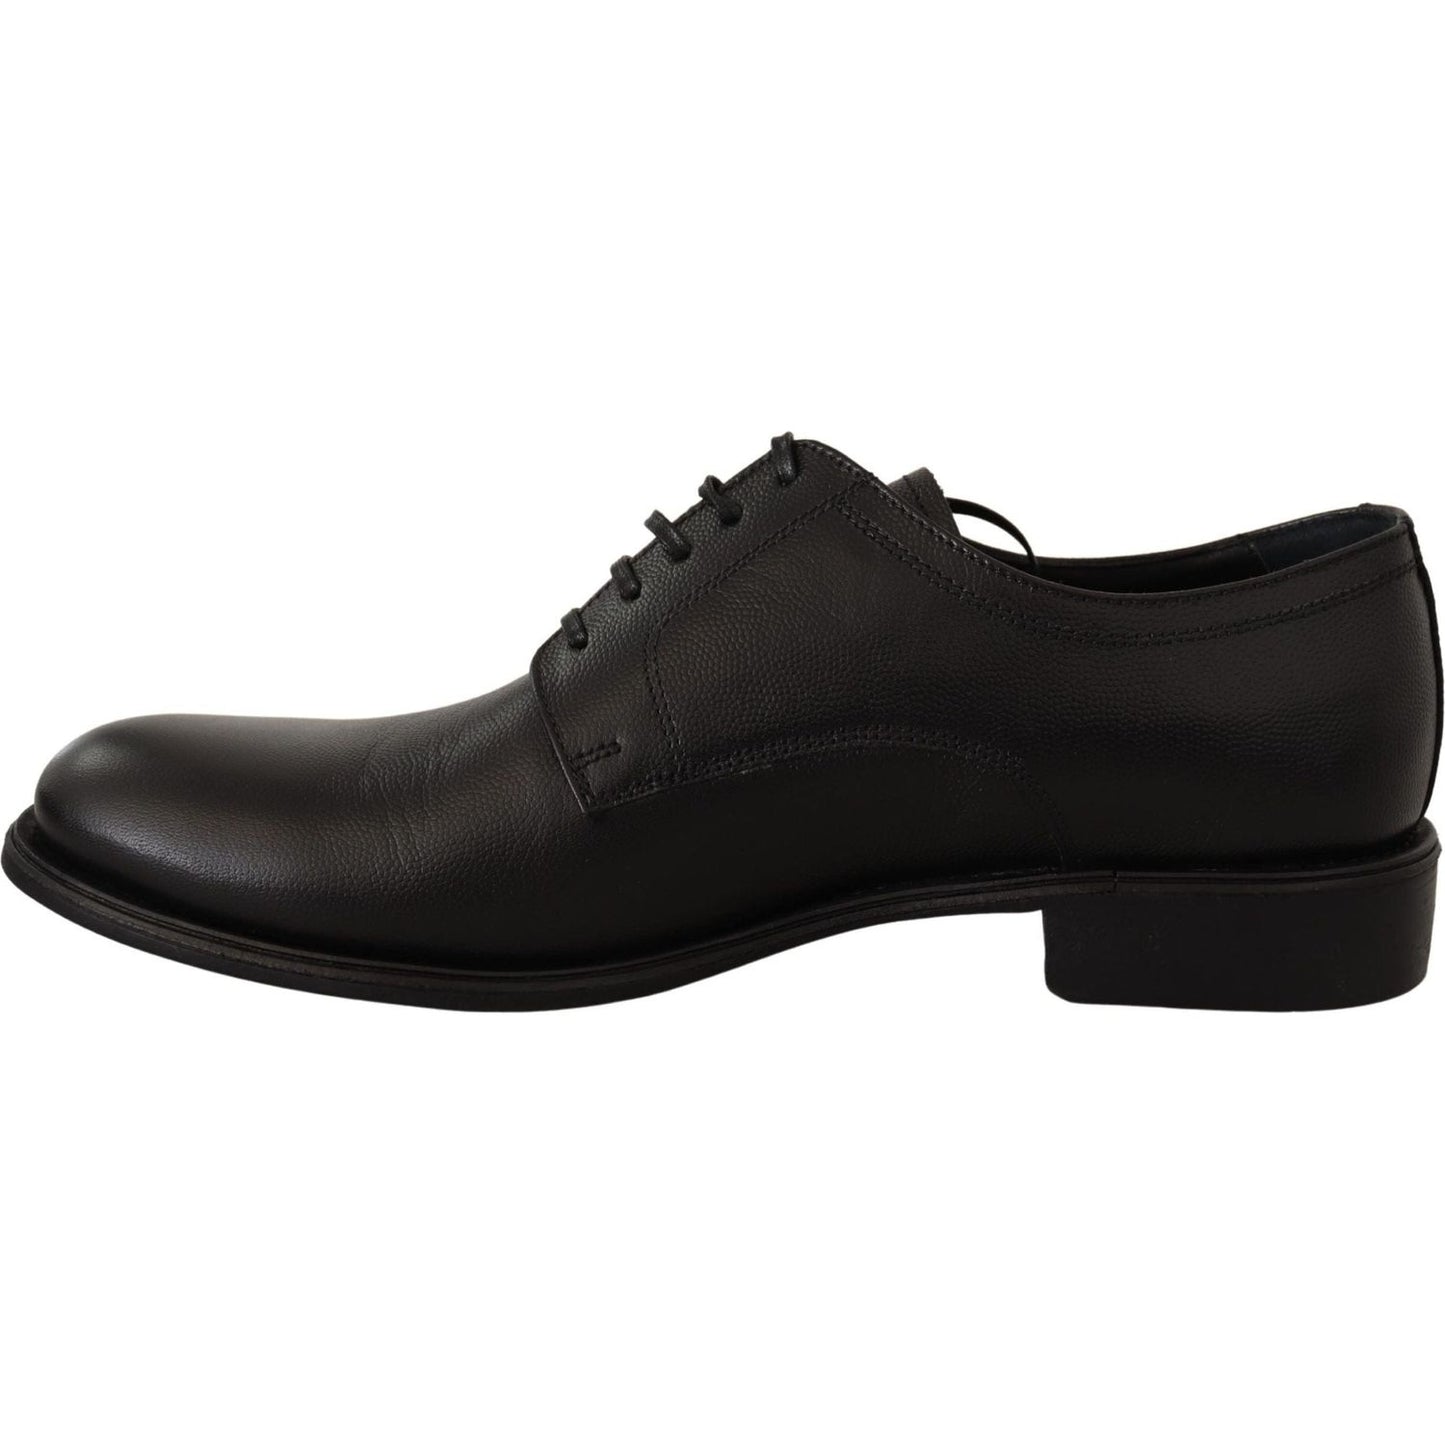 Dolce & Gabbana Elegant Black Leather Derby Shoes black-leather-lace-up-mens-formal-derby-shoes-1 IMG_4971-scaled-24406258-cdc.jpg